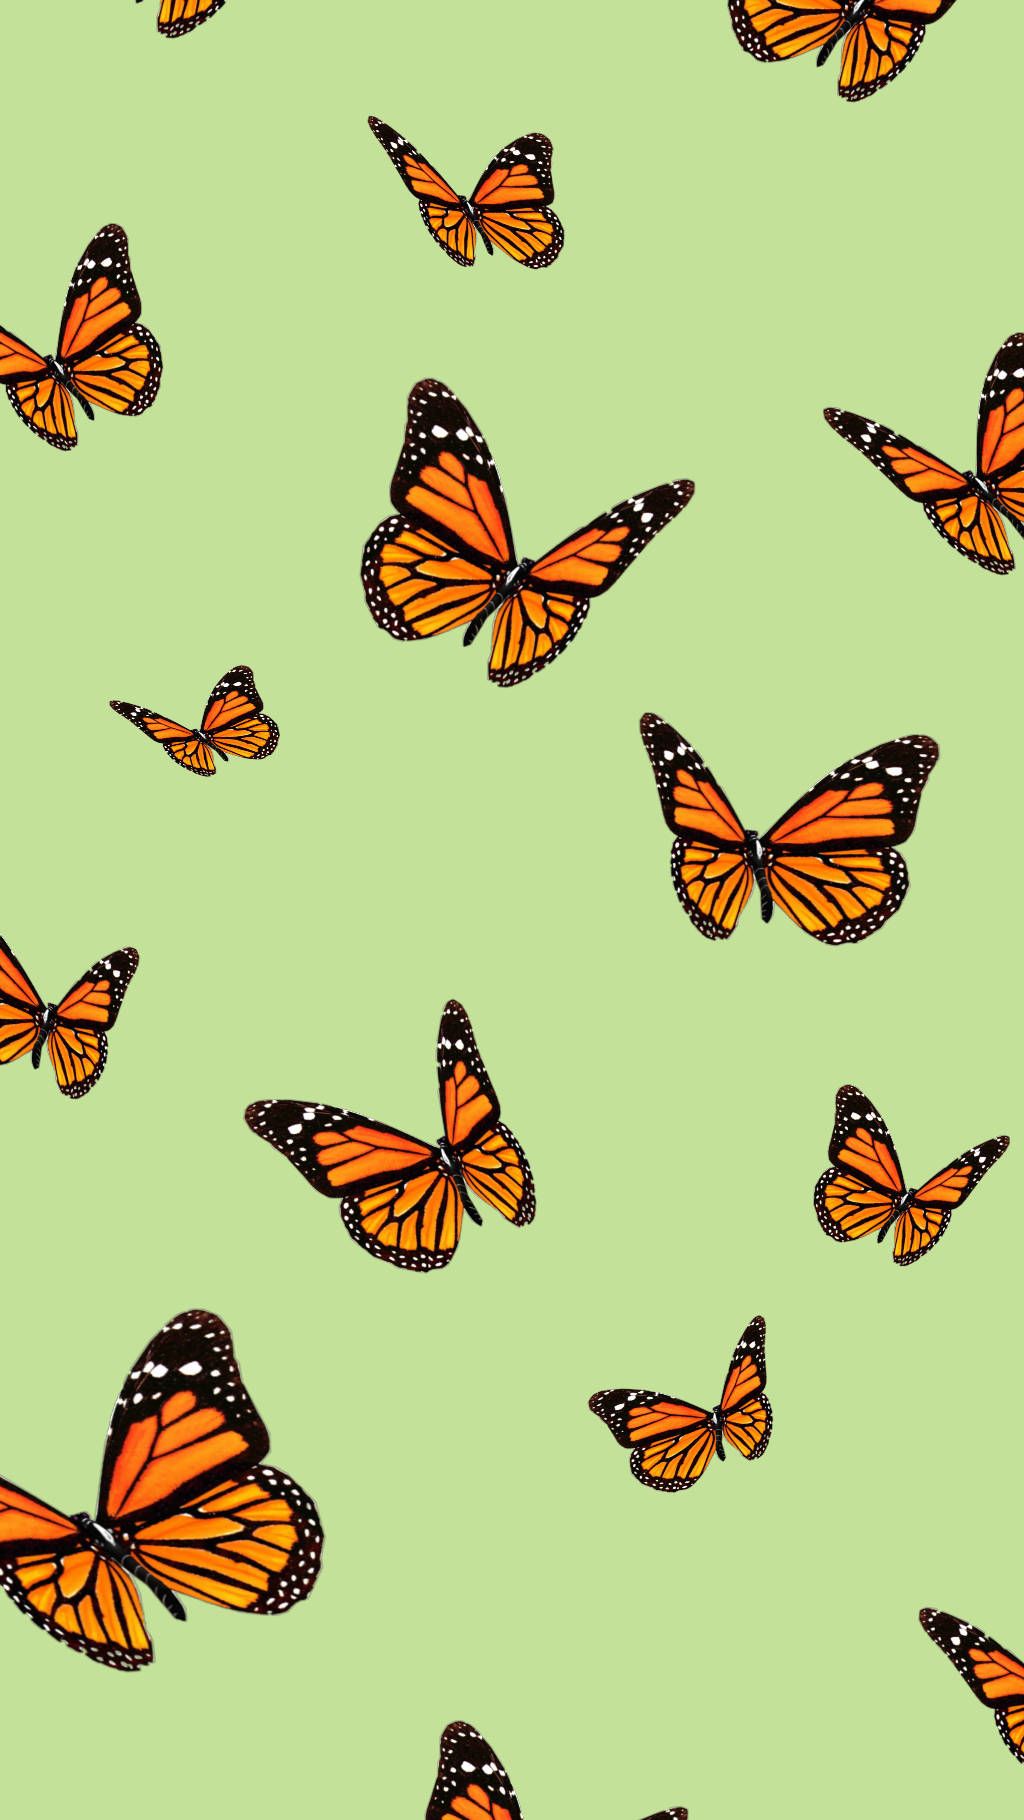 Free Butterfly Aesthetic Wallpaper Downloads, Butterfly Aesthetic Wallpaper for FREE